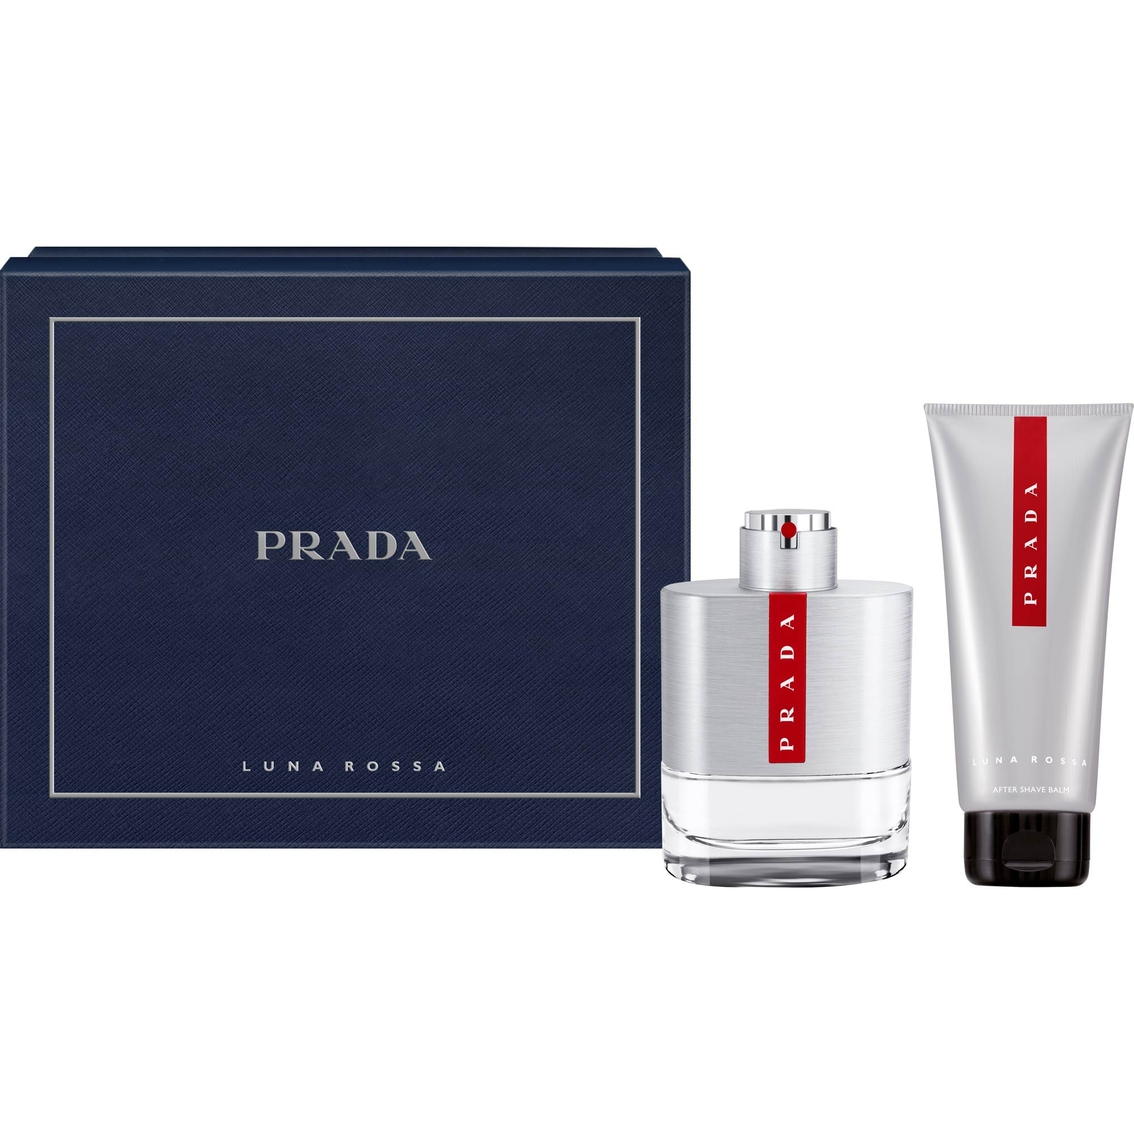 Prada Luna Rossa Gift Set | Gifts Sets For Him | Beauty & Health | Shop ...